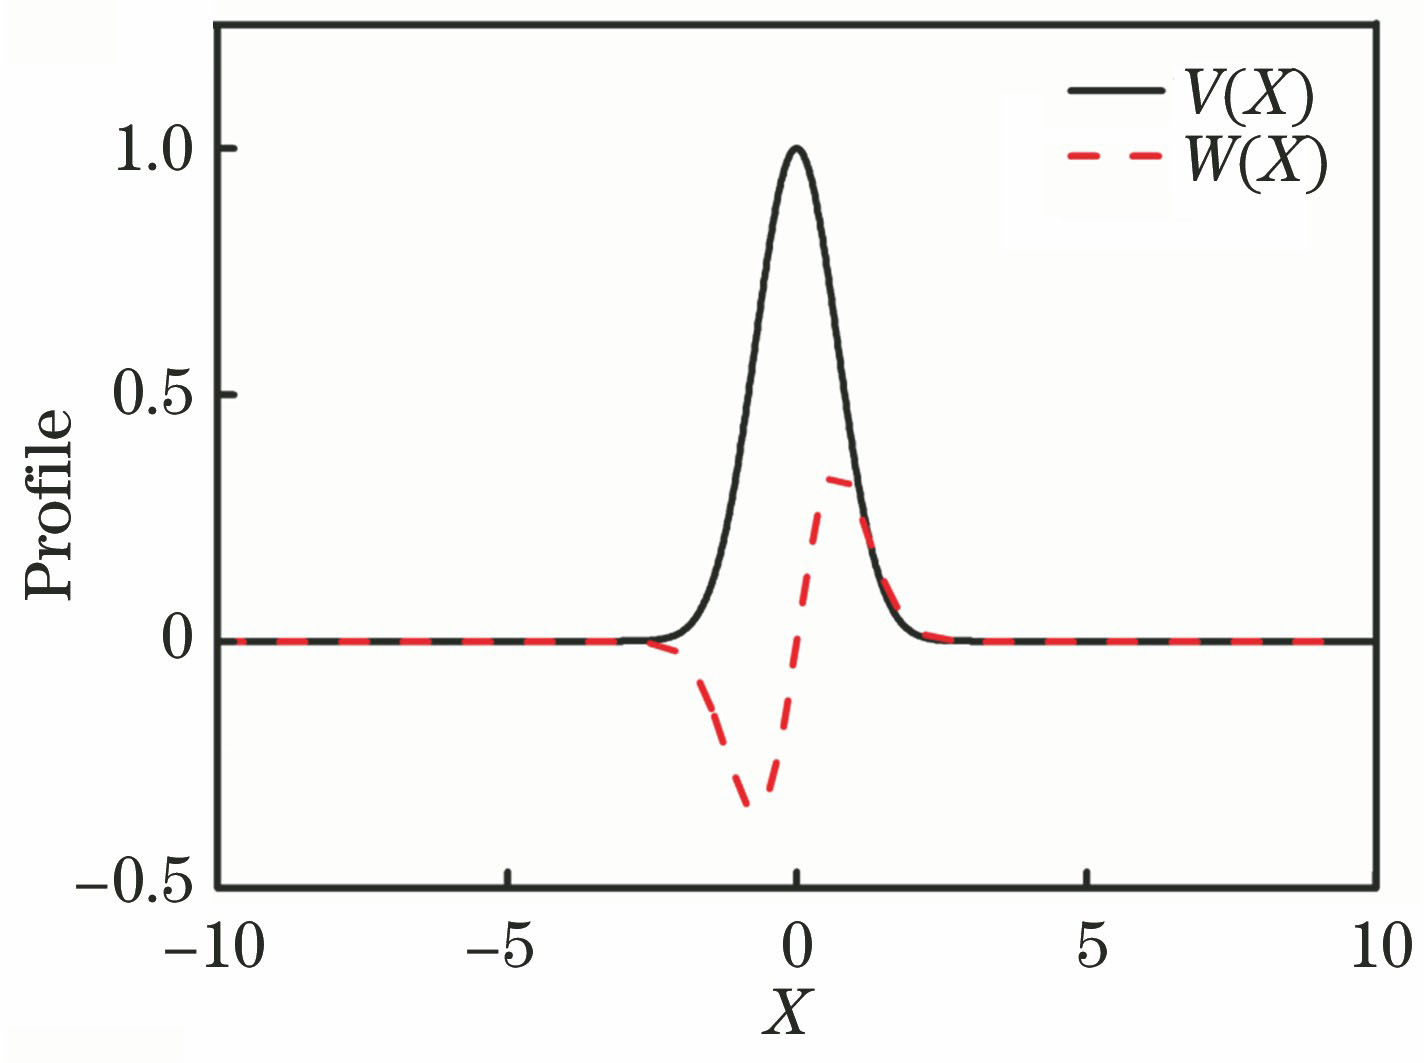 Curves of refractive-index distribution function V(X) and gain/loss distribution function W(X)(V0=1, W0=0.8, η=1)